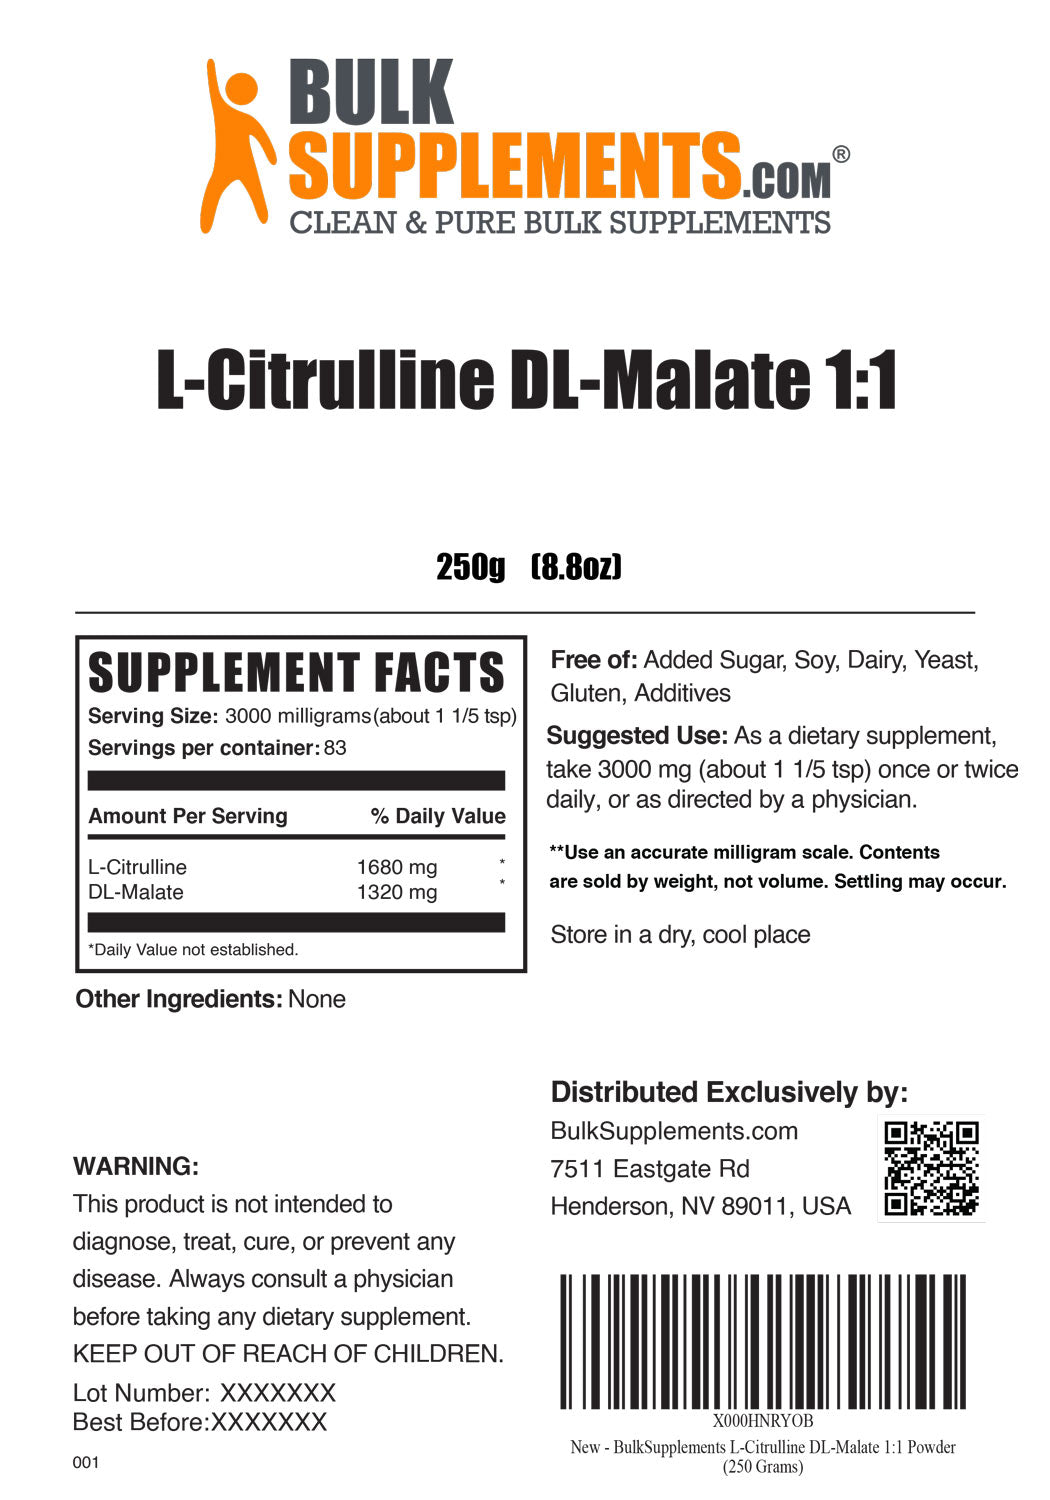 L-Citrulline DL-Malate 1:1 Supplement Facts for 250g bag